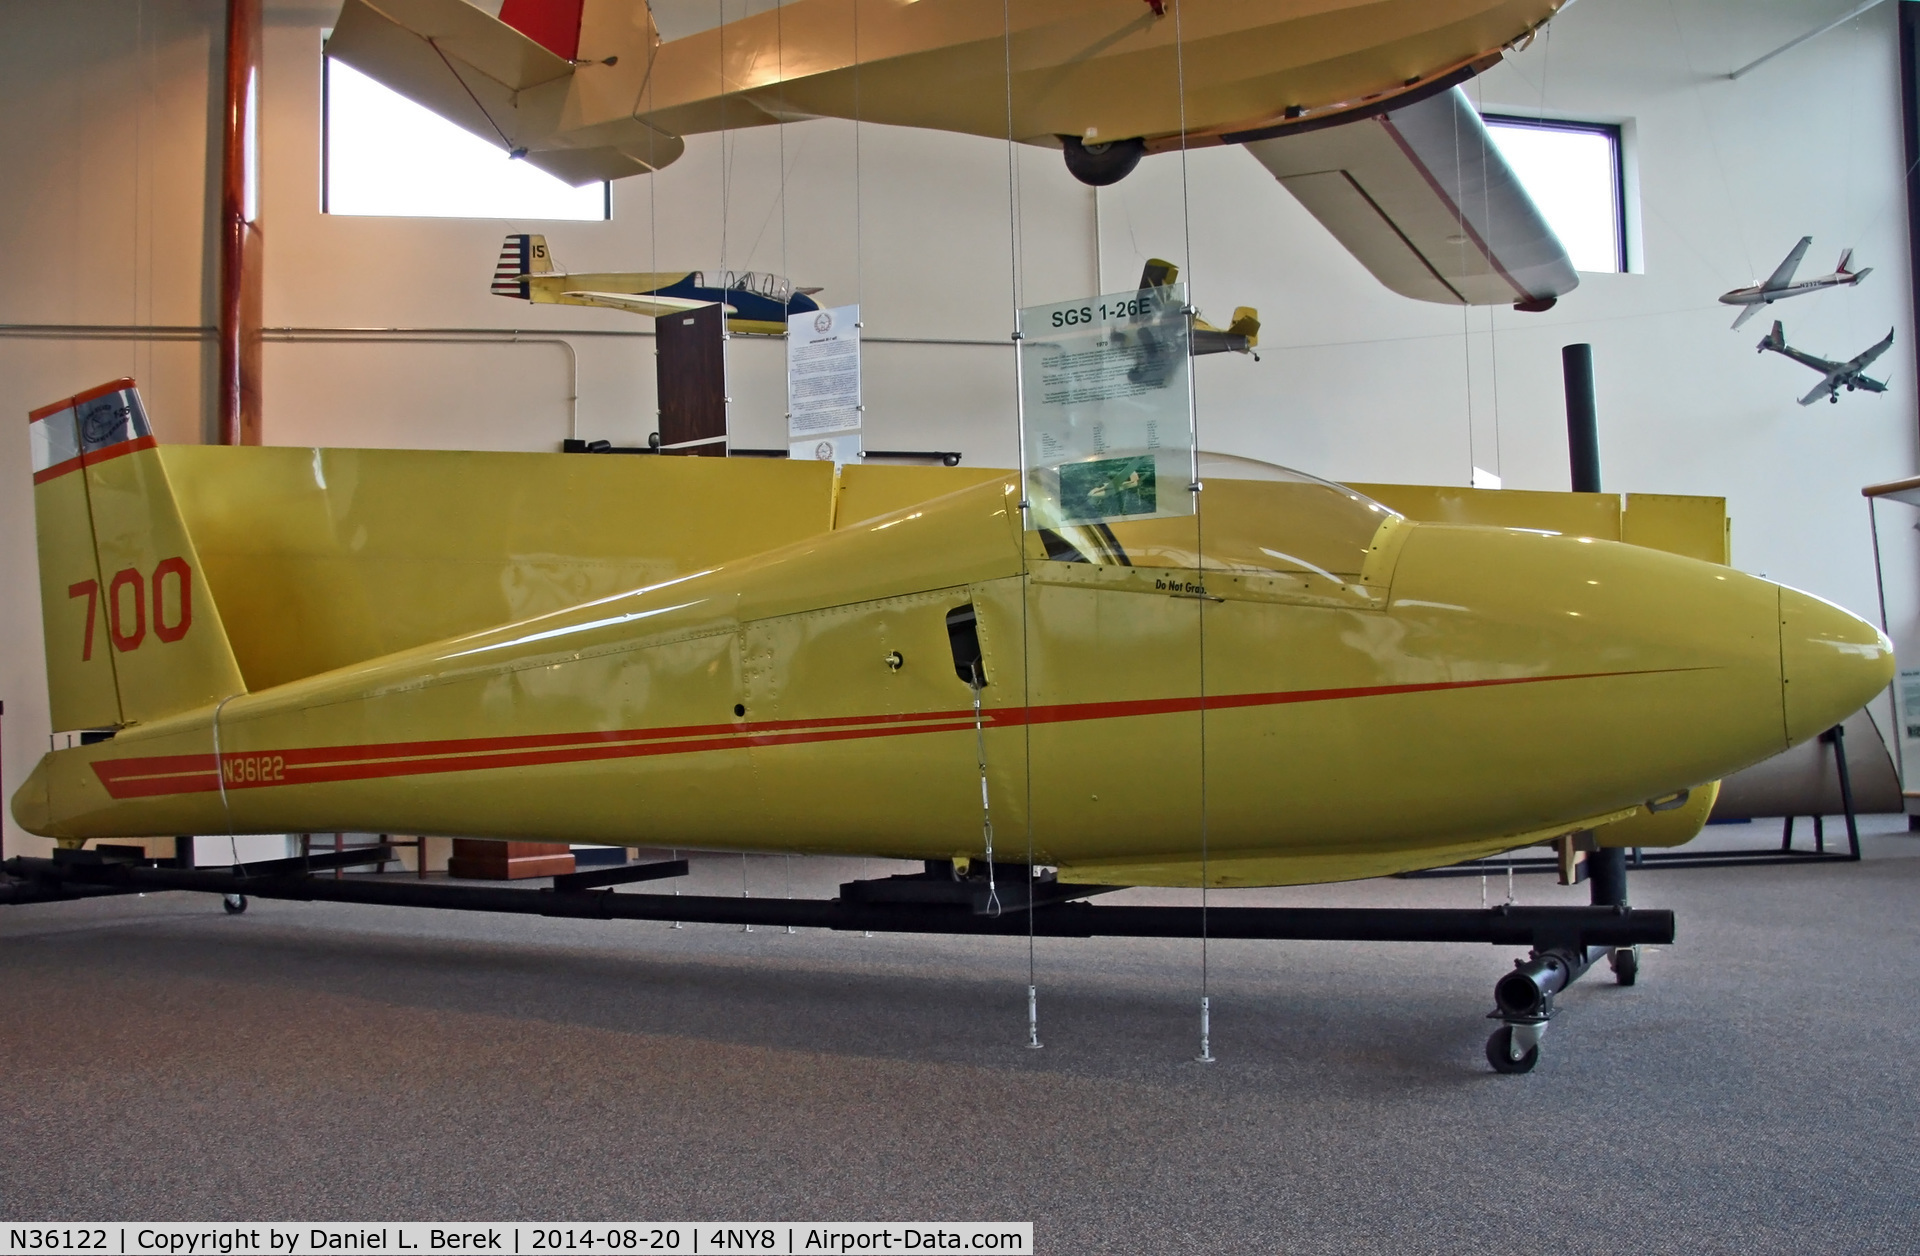 N36122, 1979 Schweizer SGS 1-26E C/N 700, Fine 1979 Schweizer glider on display at the National Soaring Museum.